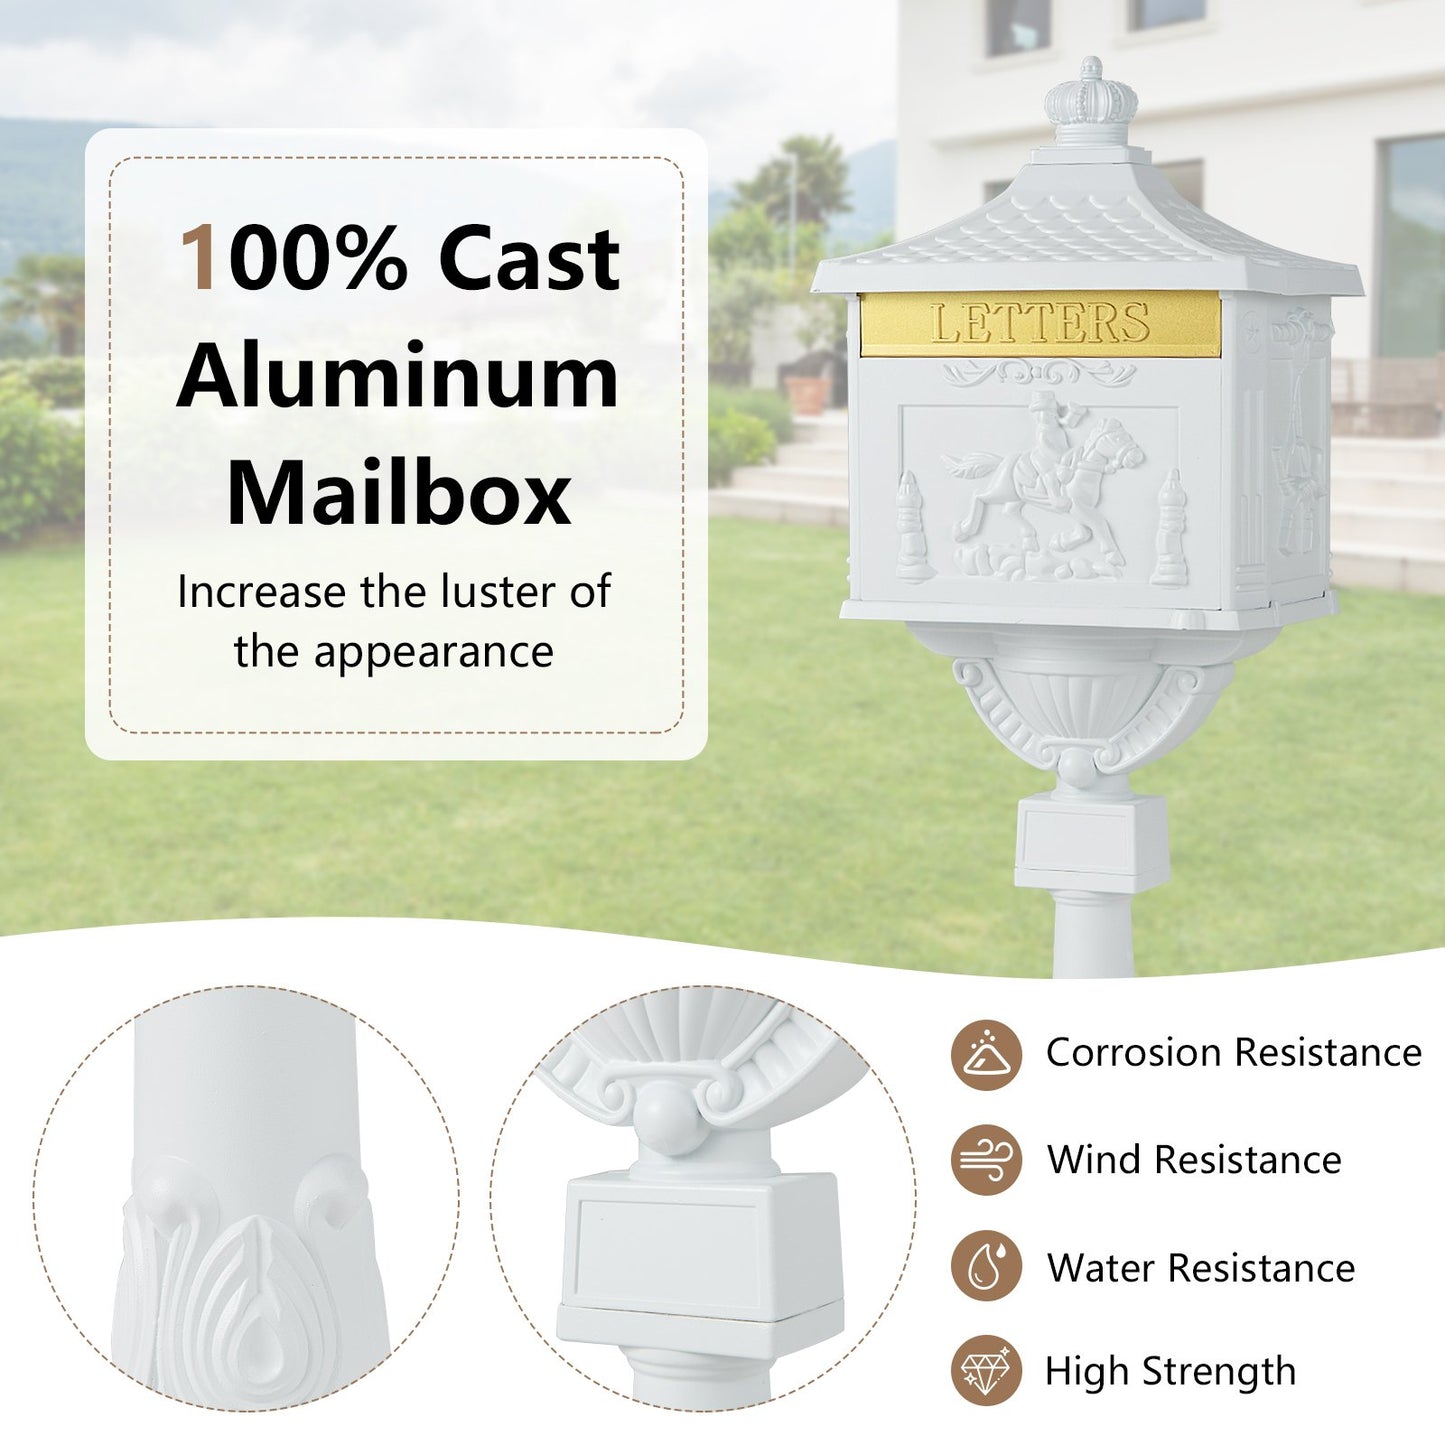 Retro Cast Aluminum Mailbox Security Postal Letter Box with Baffle Door, White